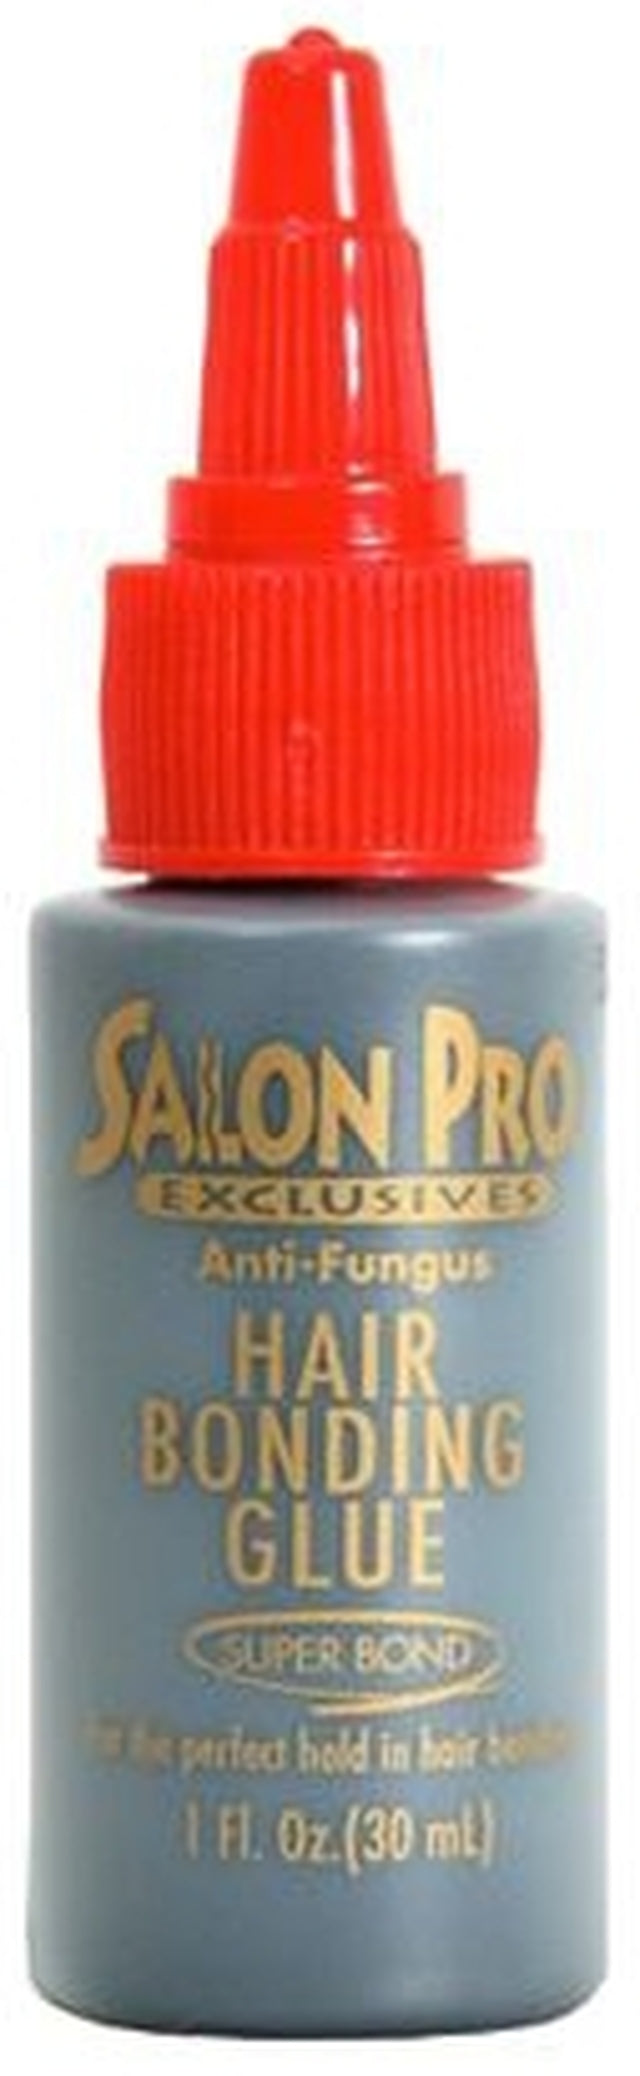 Salon Pro- Hair Bond Glue